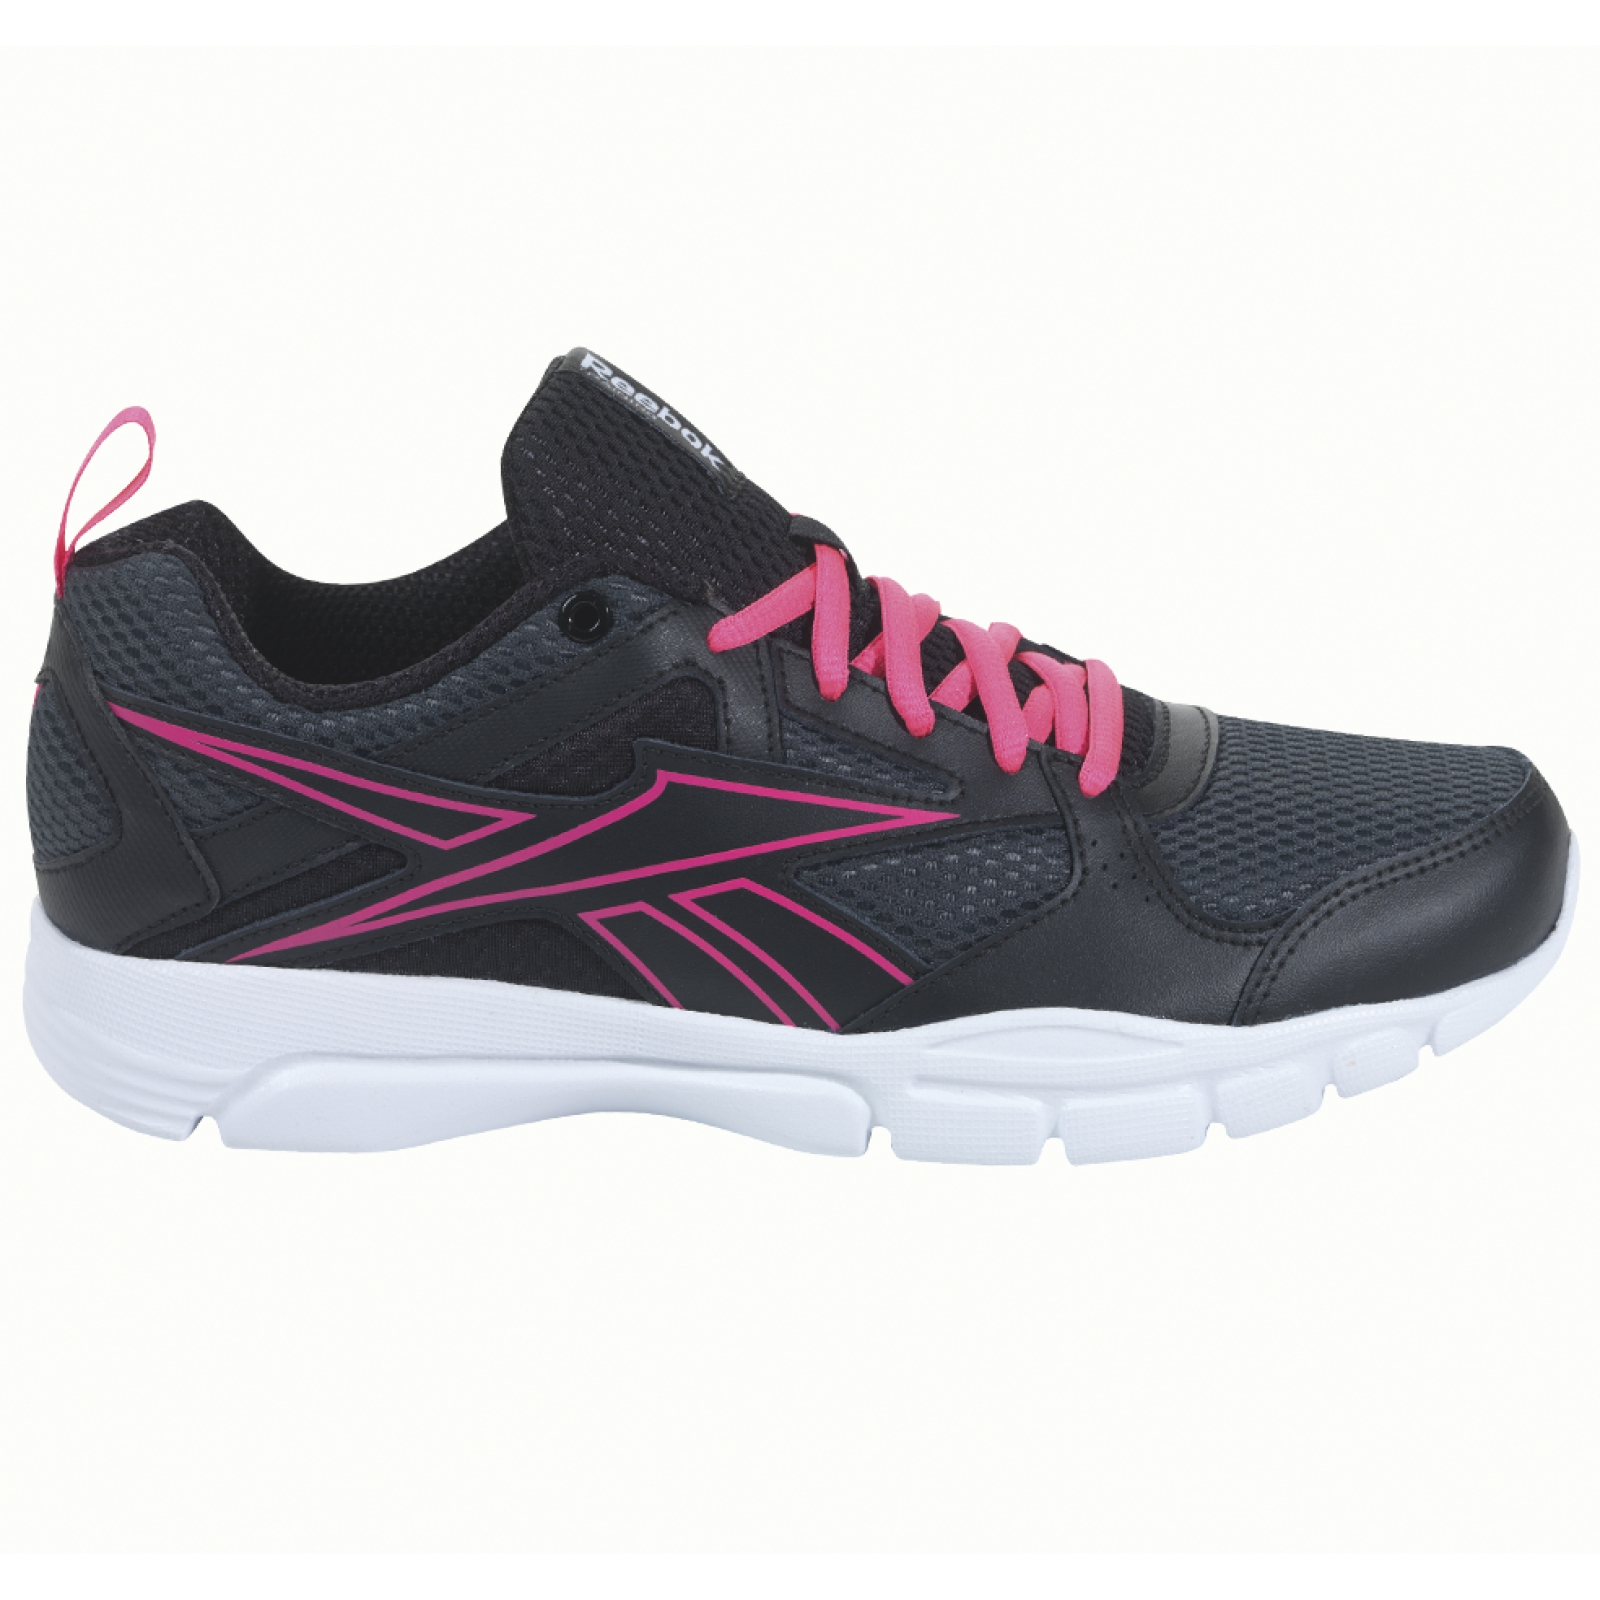 Reebok Women's Trainfusion 5.0 Athletic Shoe - Black/Pink